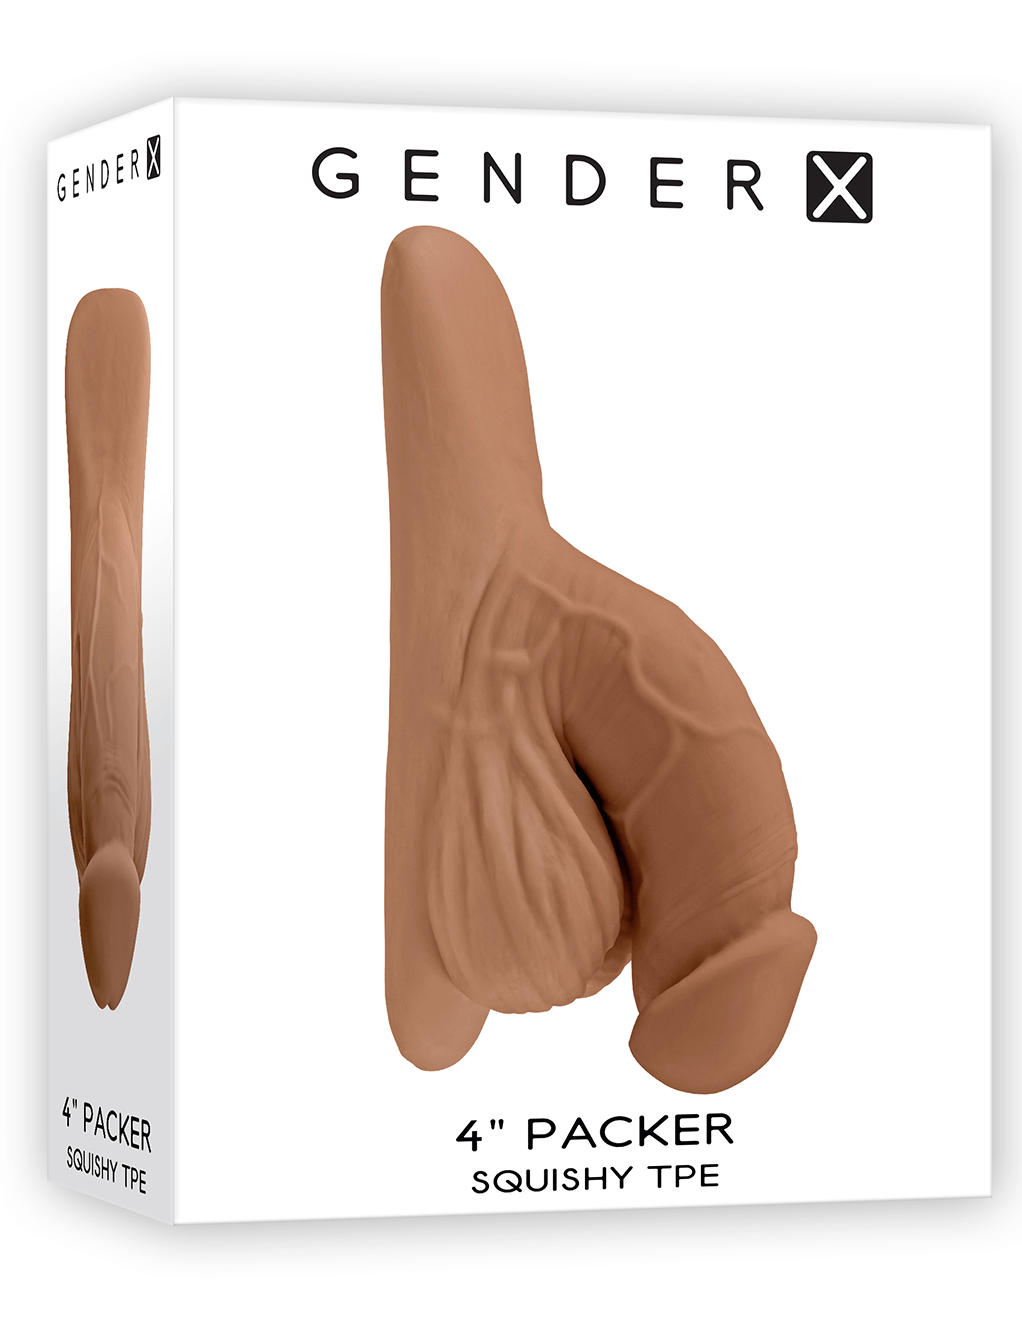 Gender X 4" Packer - Caramel - Box